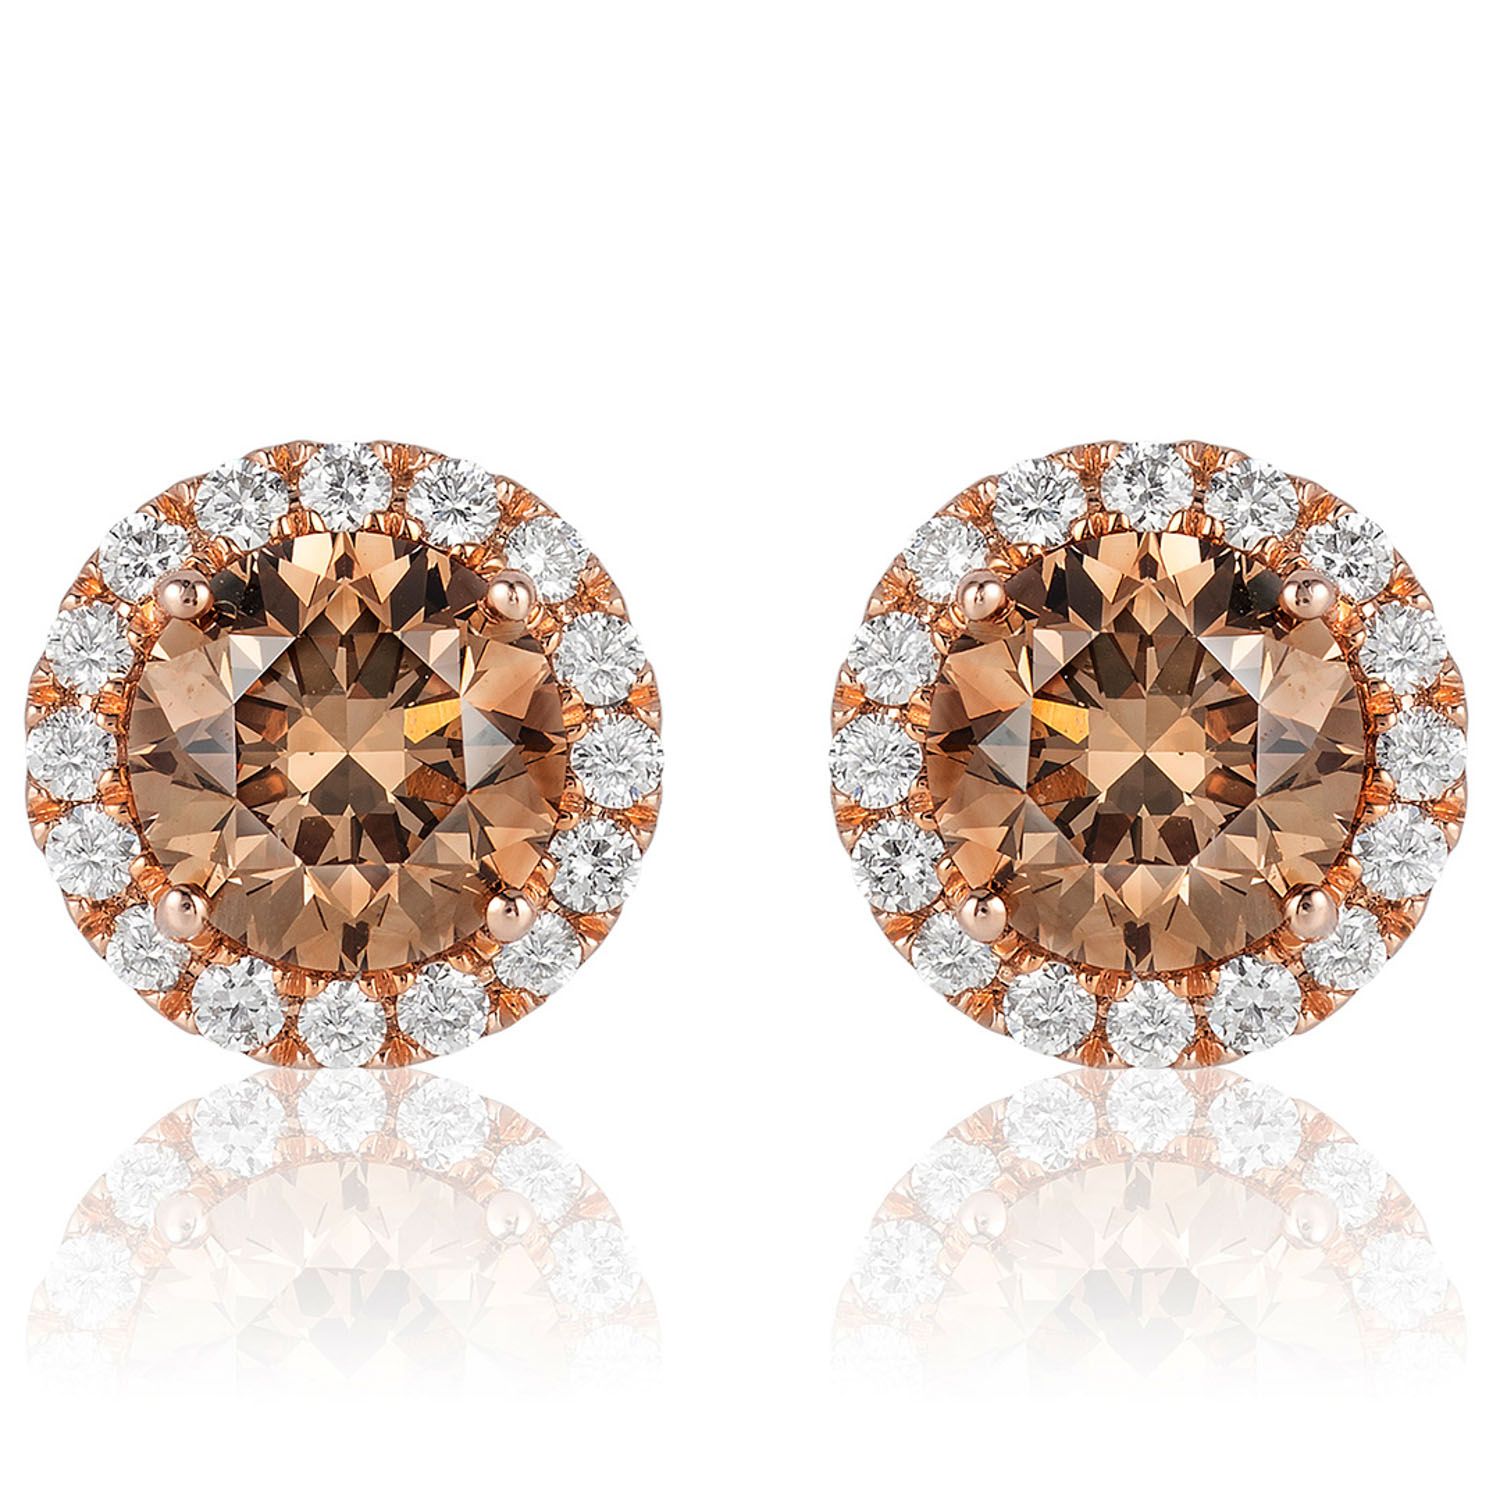 2.3 CT. T.W. Round Fancy Brown Diamond Stud Earrings in 14K Rose Gold (I, SI2)